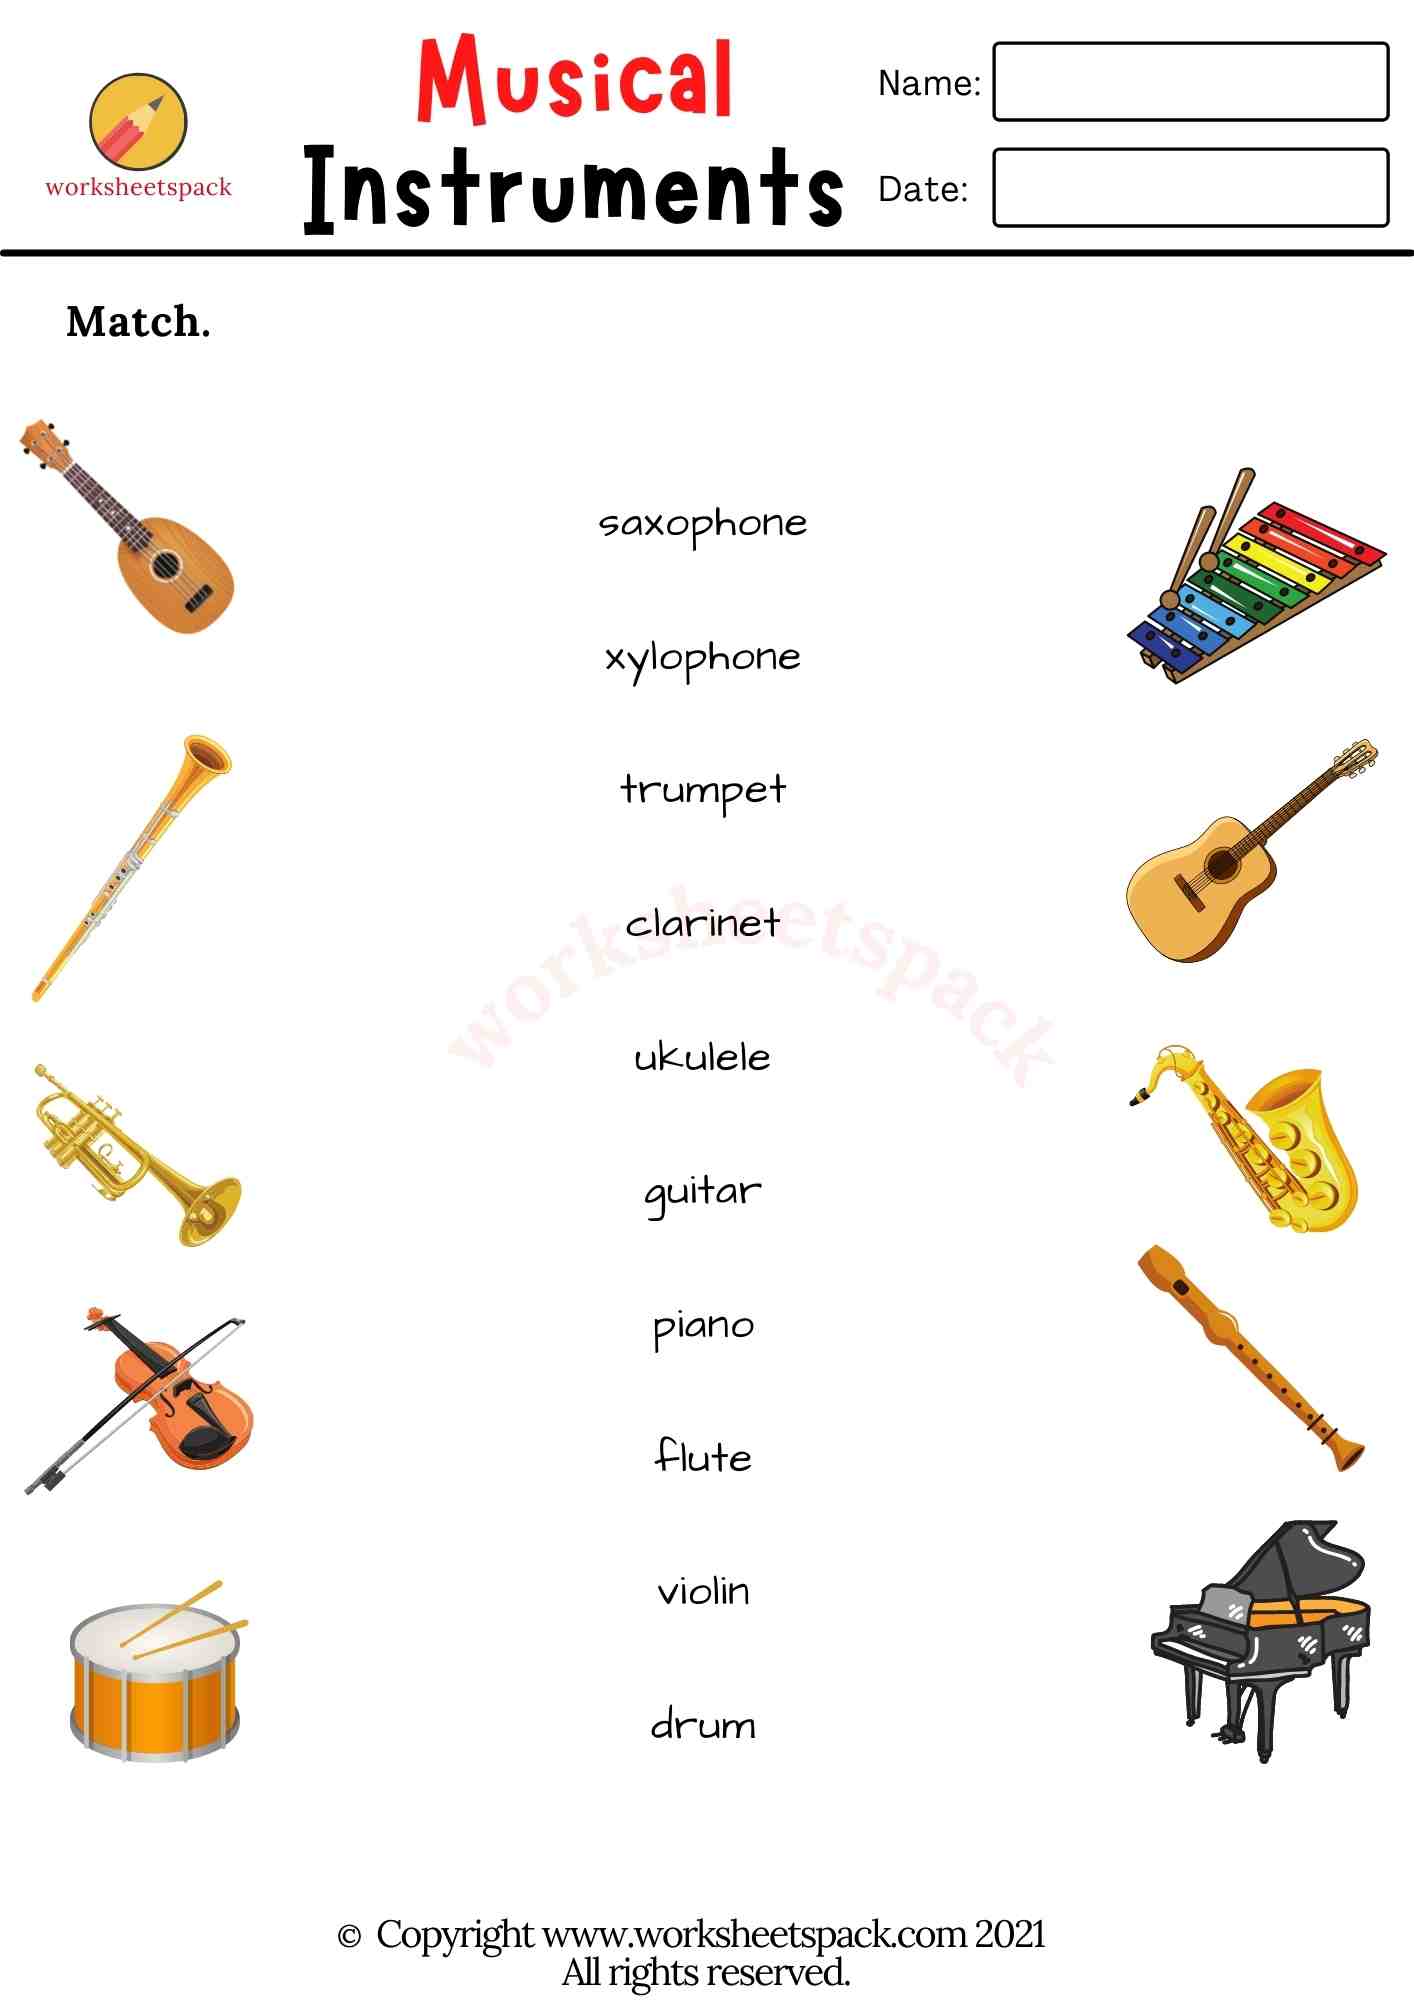 Musical Instruments Worksheets Worksheetspack